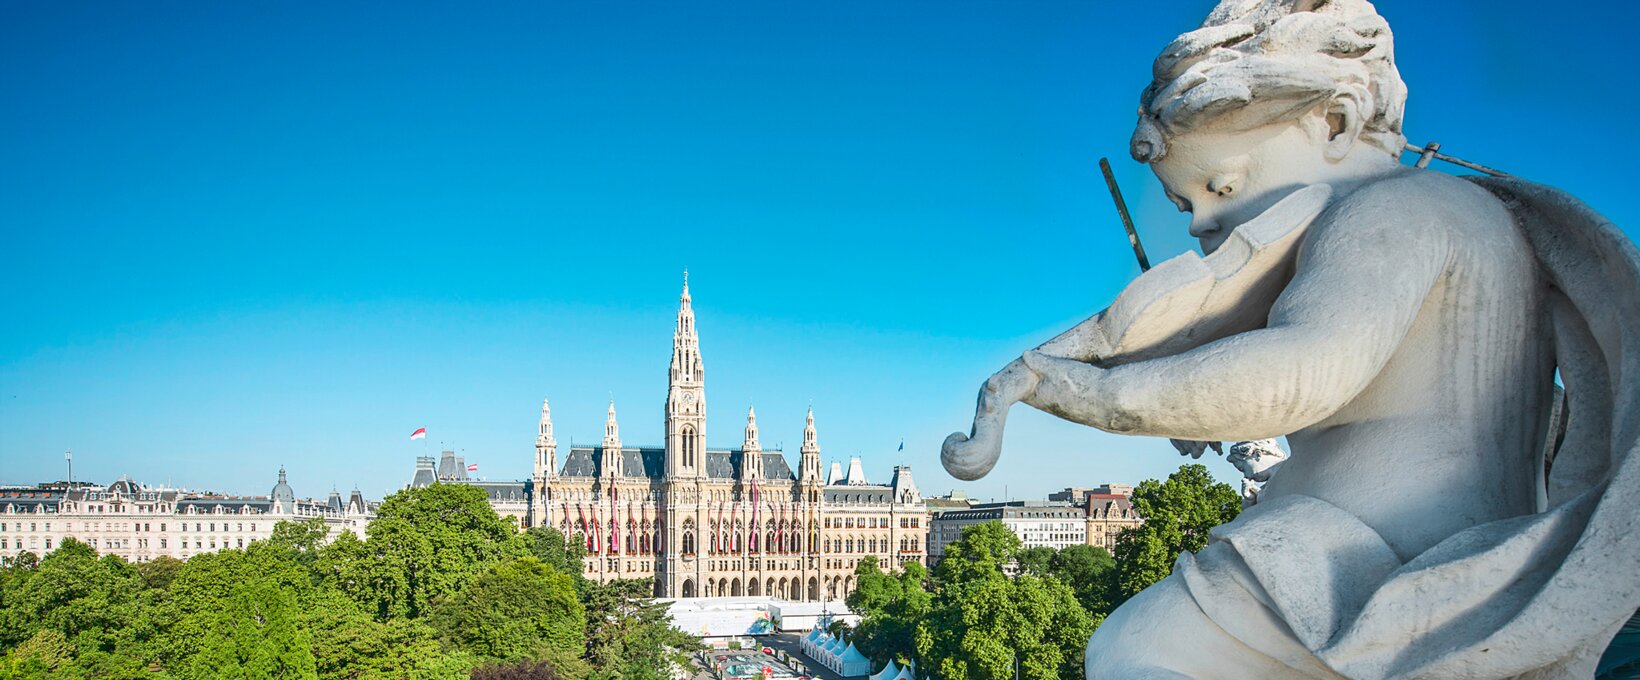 Panorama Rathaus with statue | Vienna | © Wien Tourismus | Christian Stemper